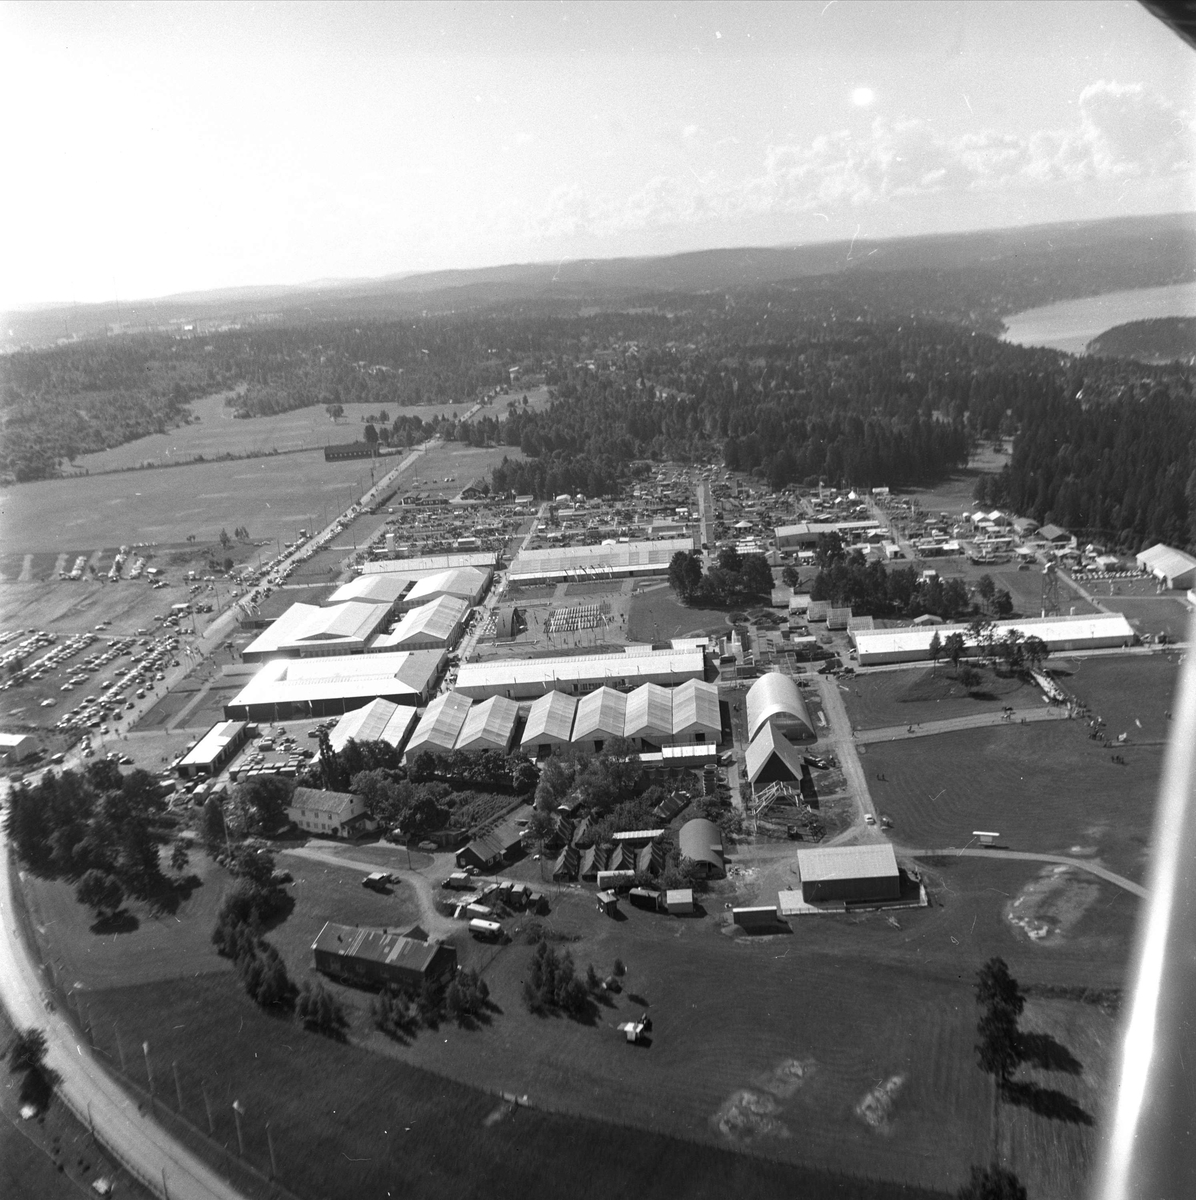 Ekeberg, Oslo, 11. juni 1959, landbruksutstilling, flyfoto over området.